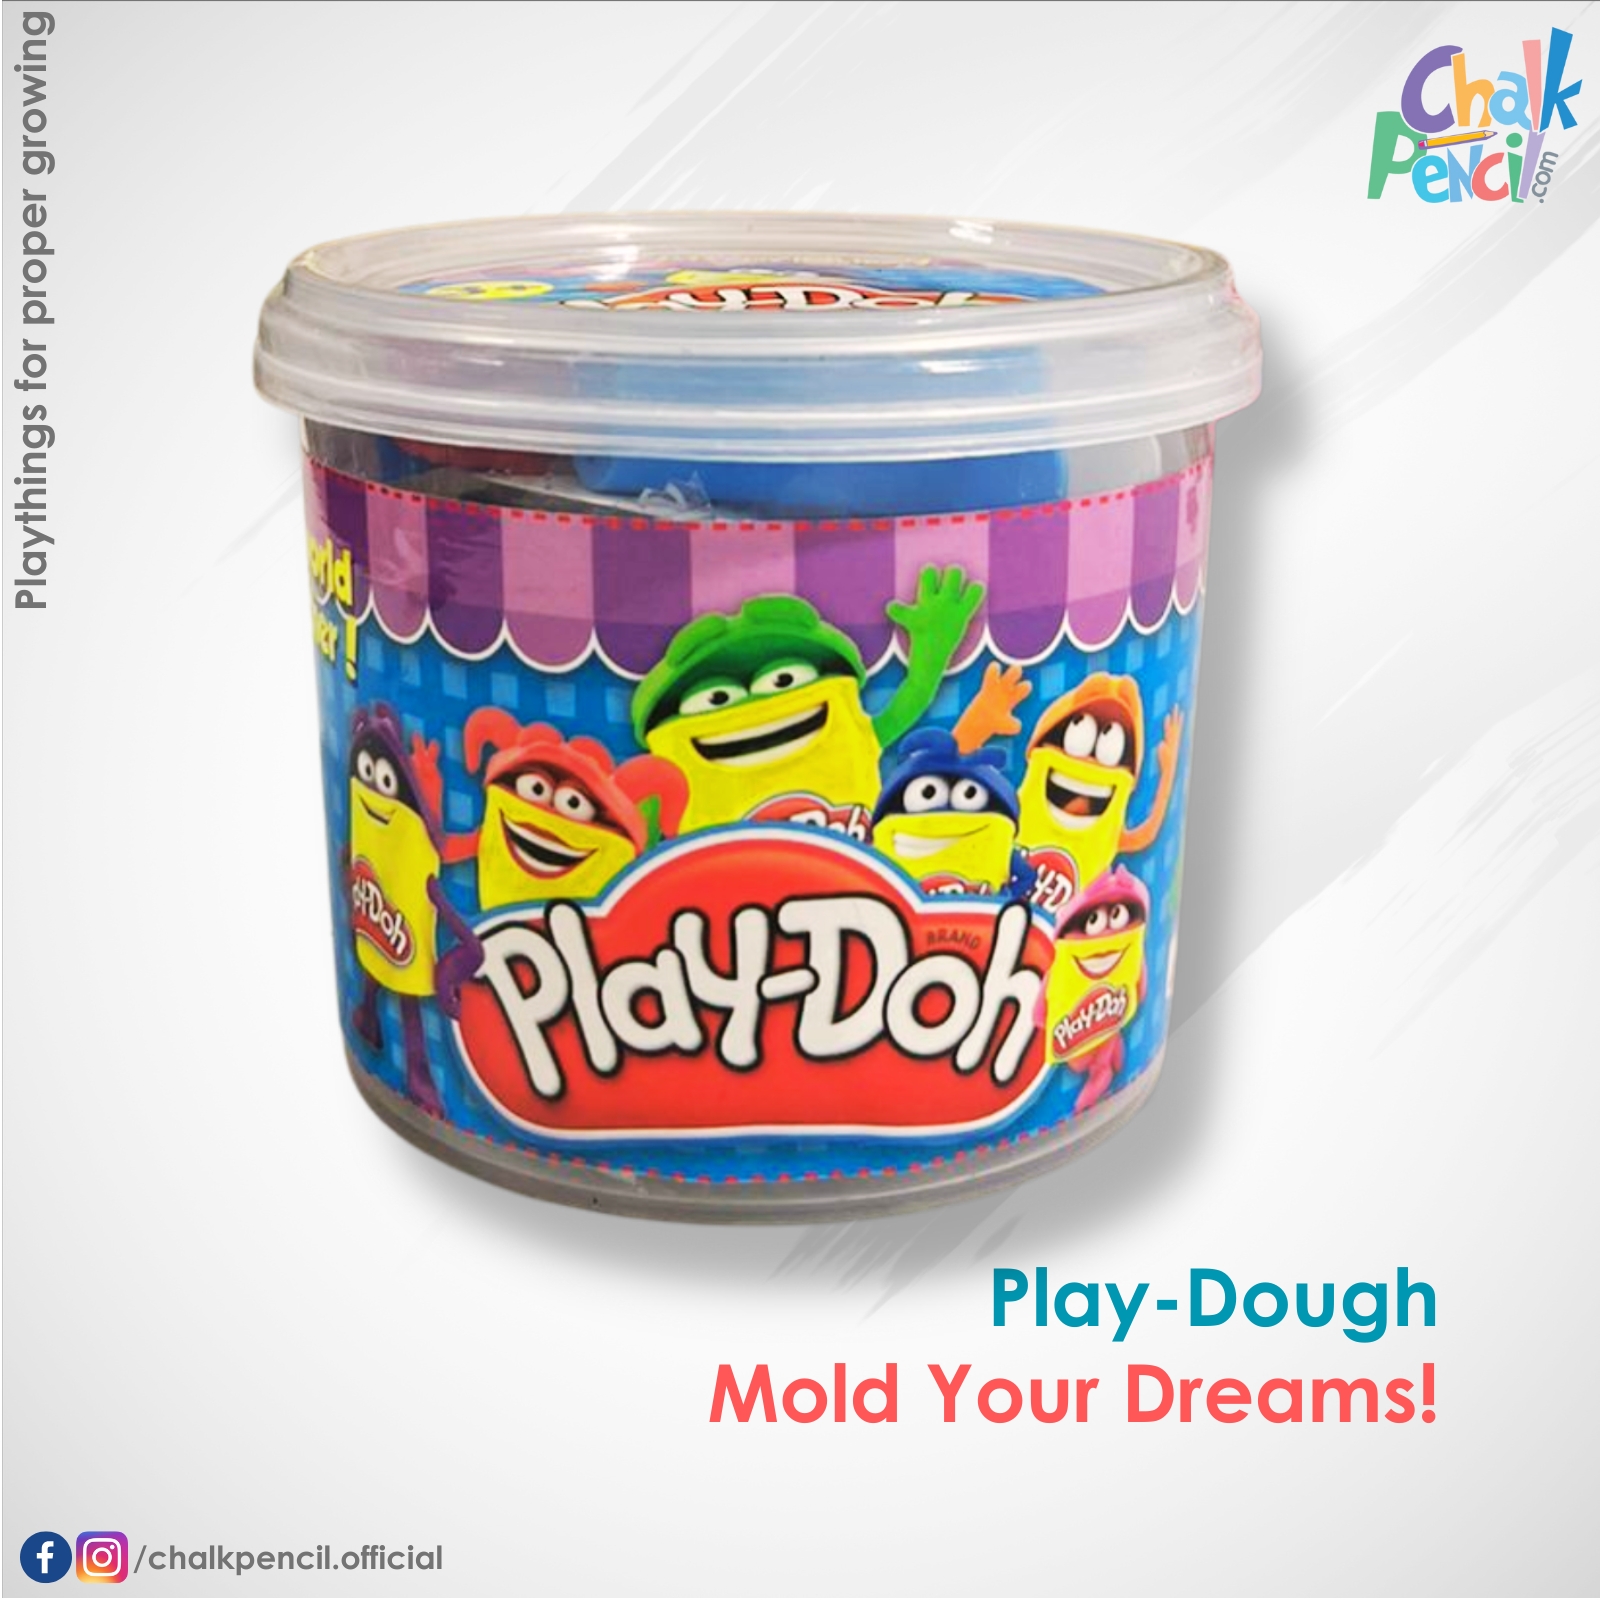 Play-Dough Special Box